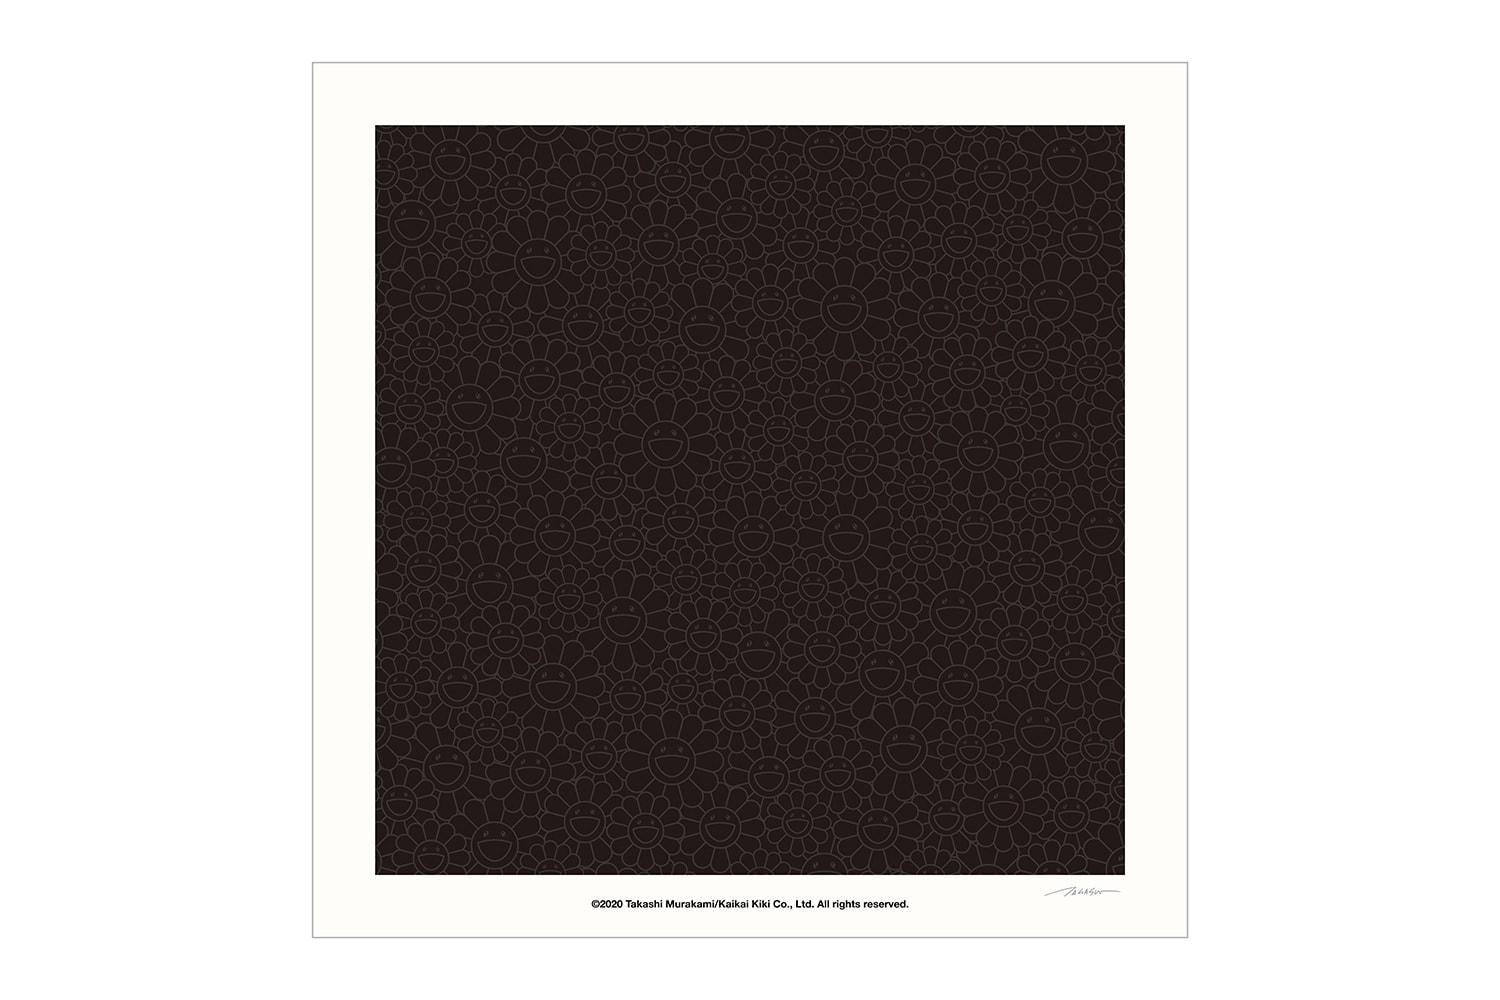 Takashi Murakami Limited Edition Black Lives Matter Prints BLM george floyd racial injustice police brutality fundraiseer NTWRK